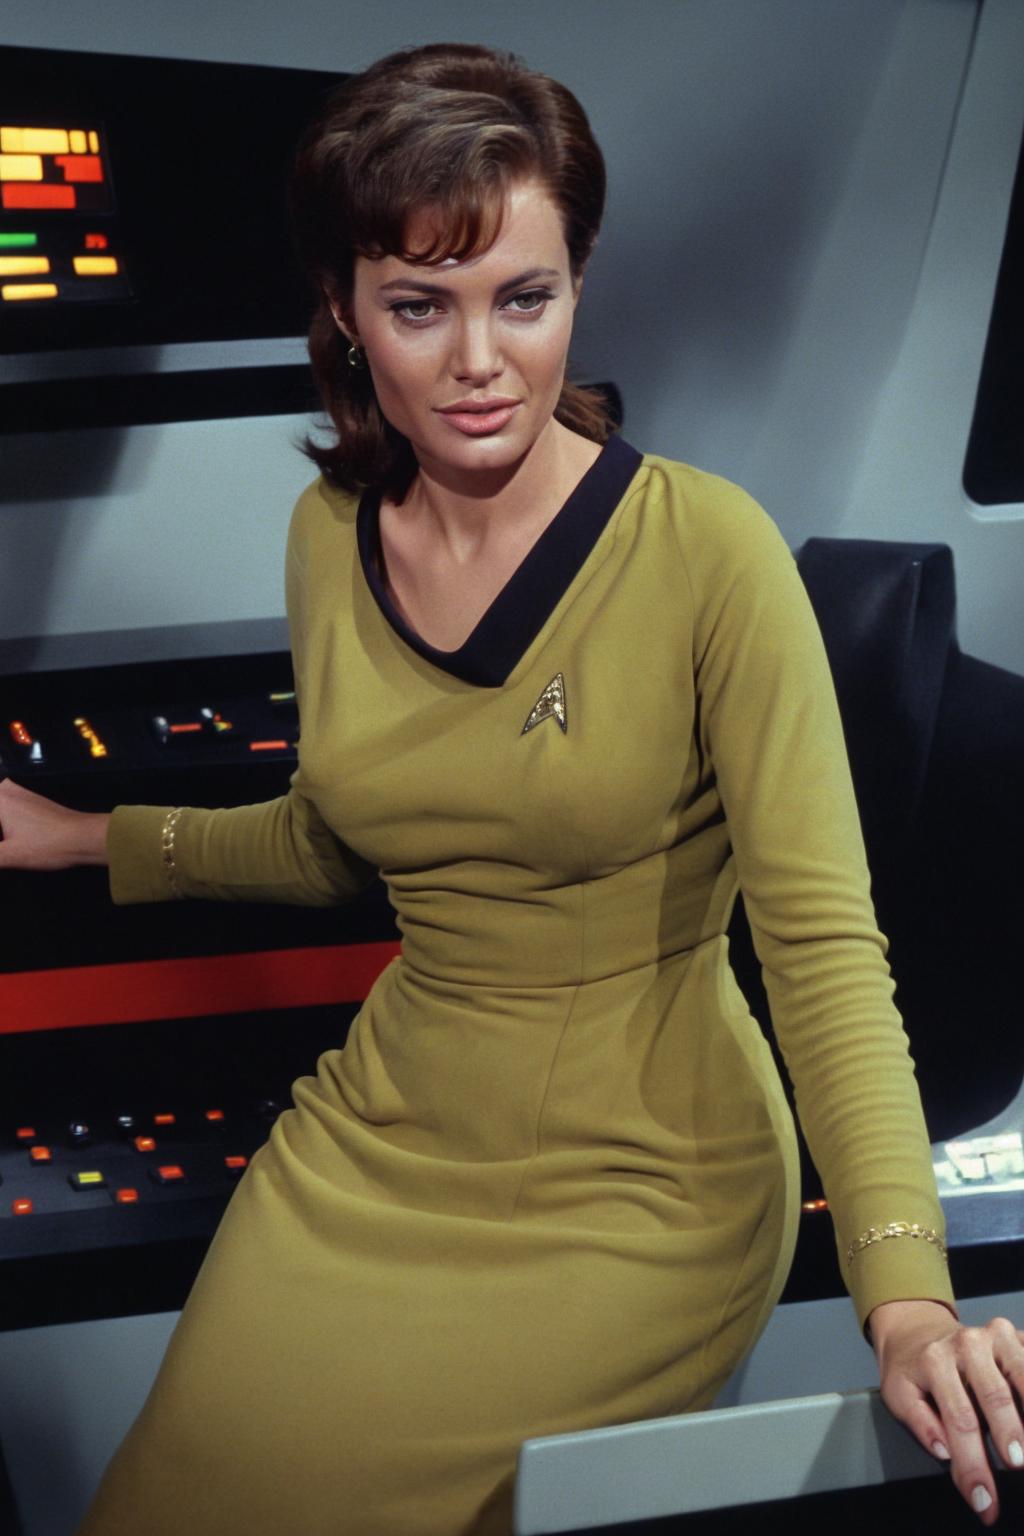 Star Trek TOS uniforms image by XX007